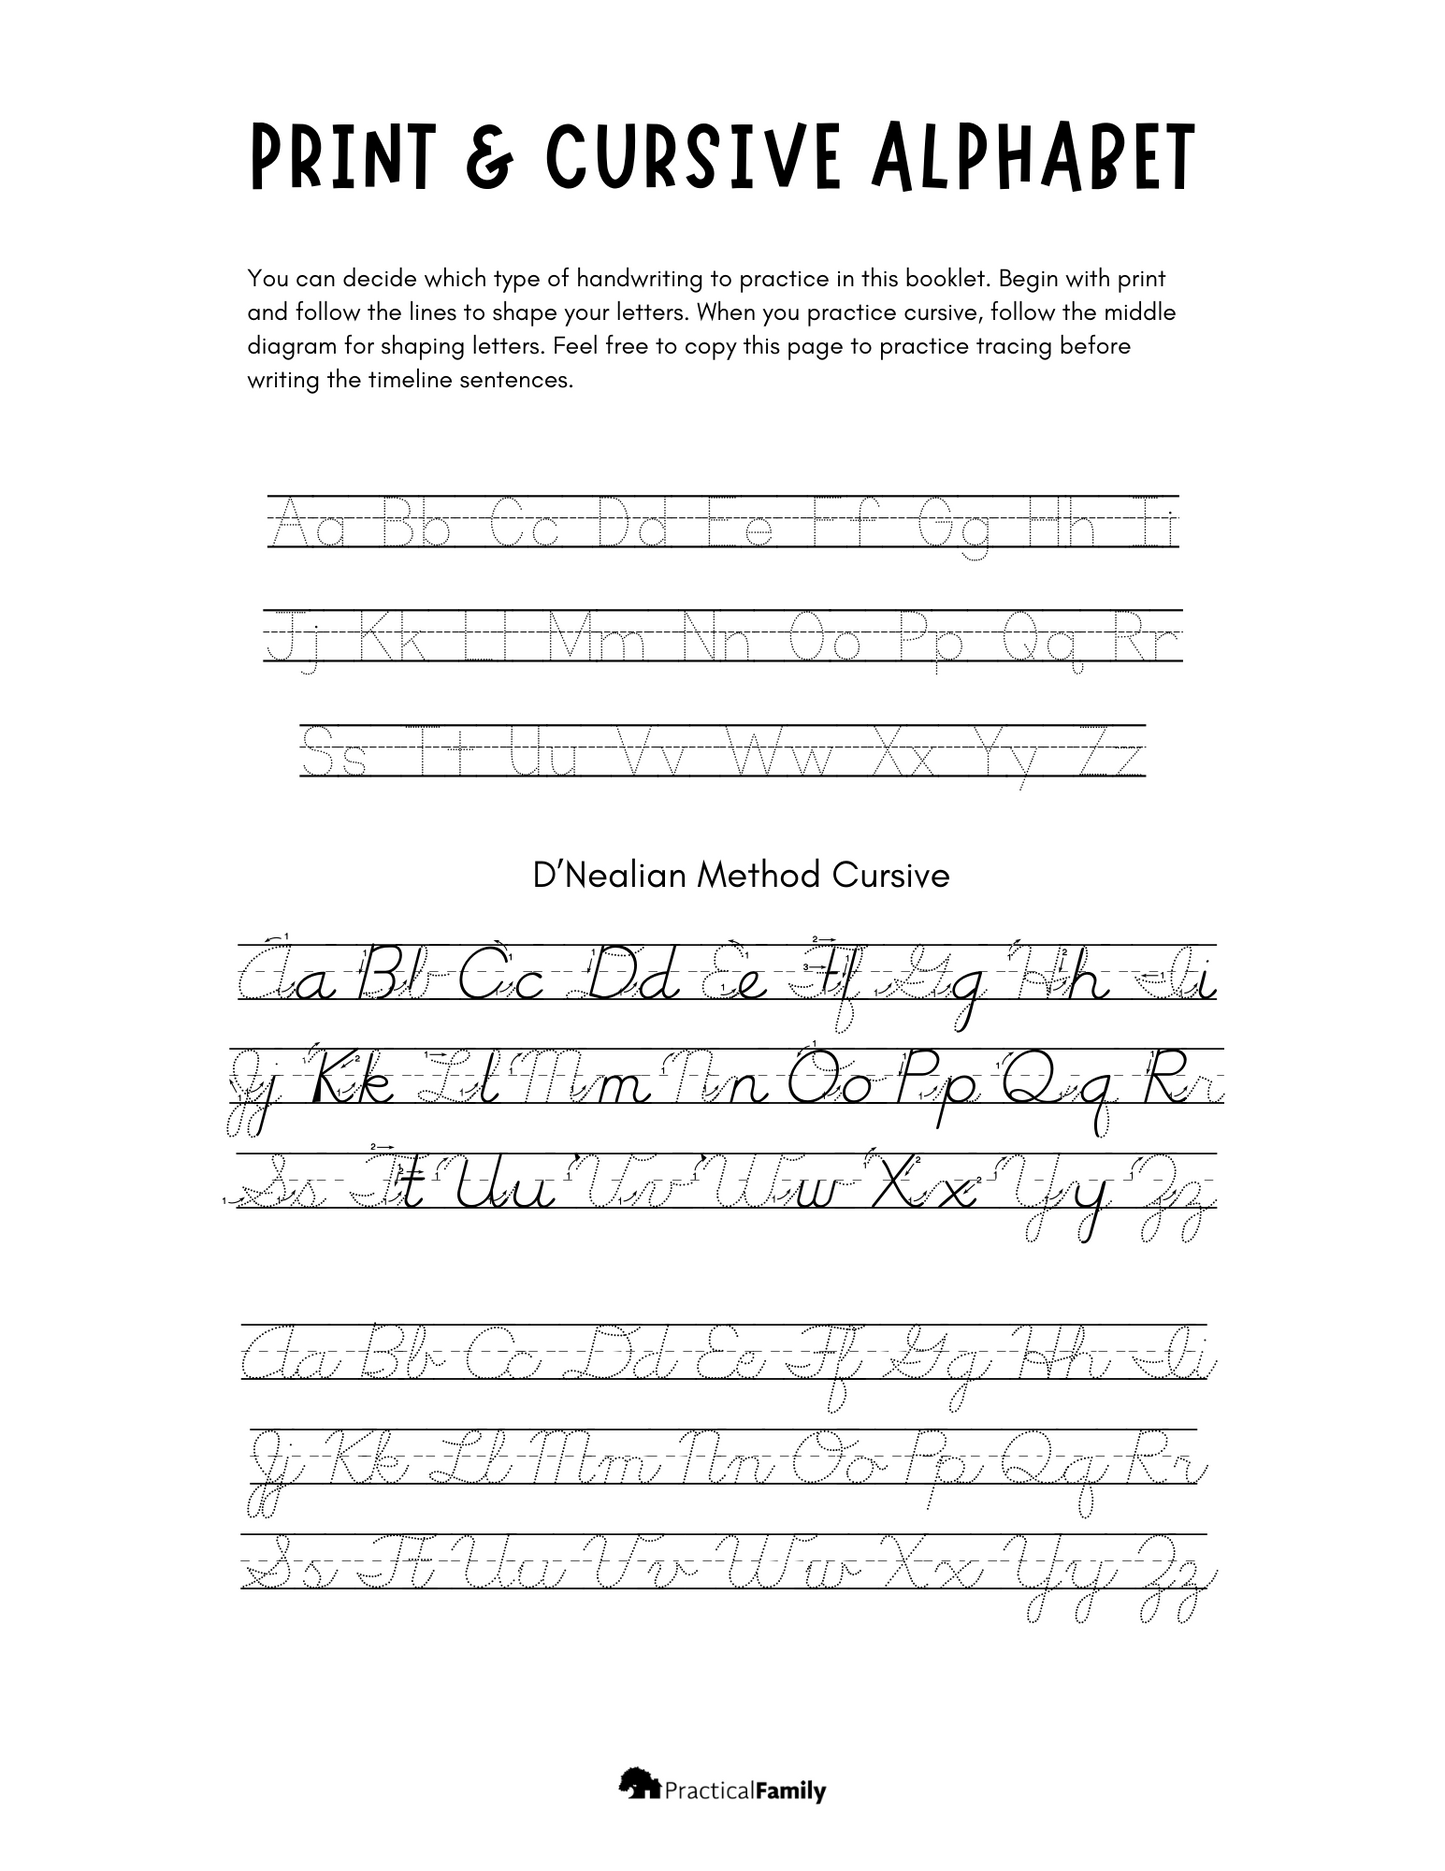 Timeline Handwriting Practice